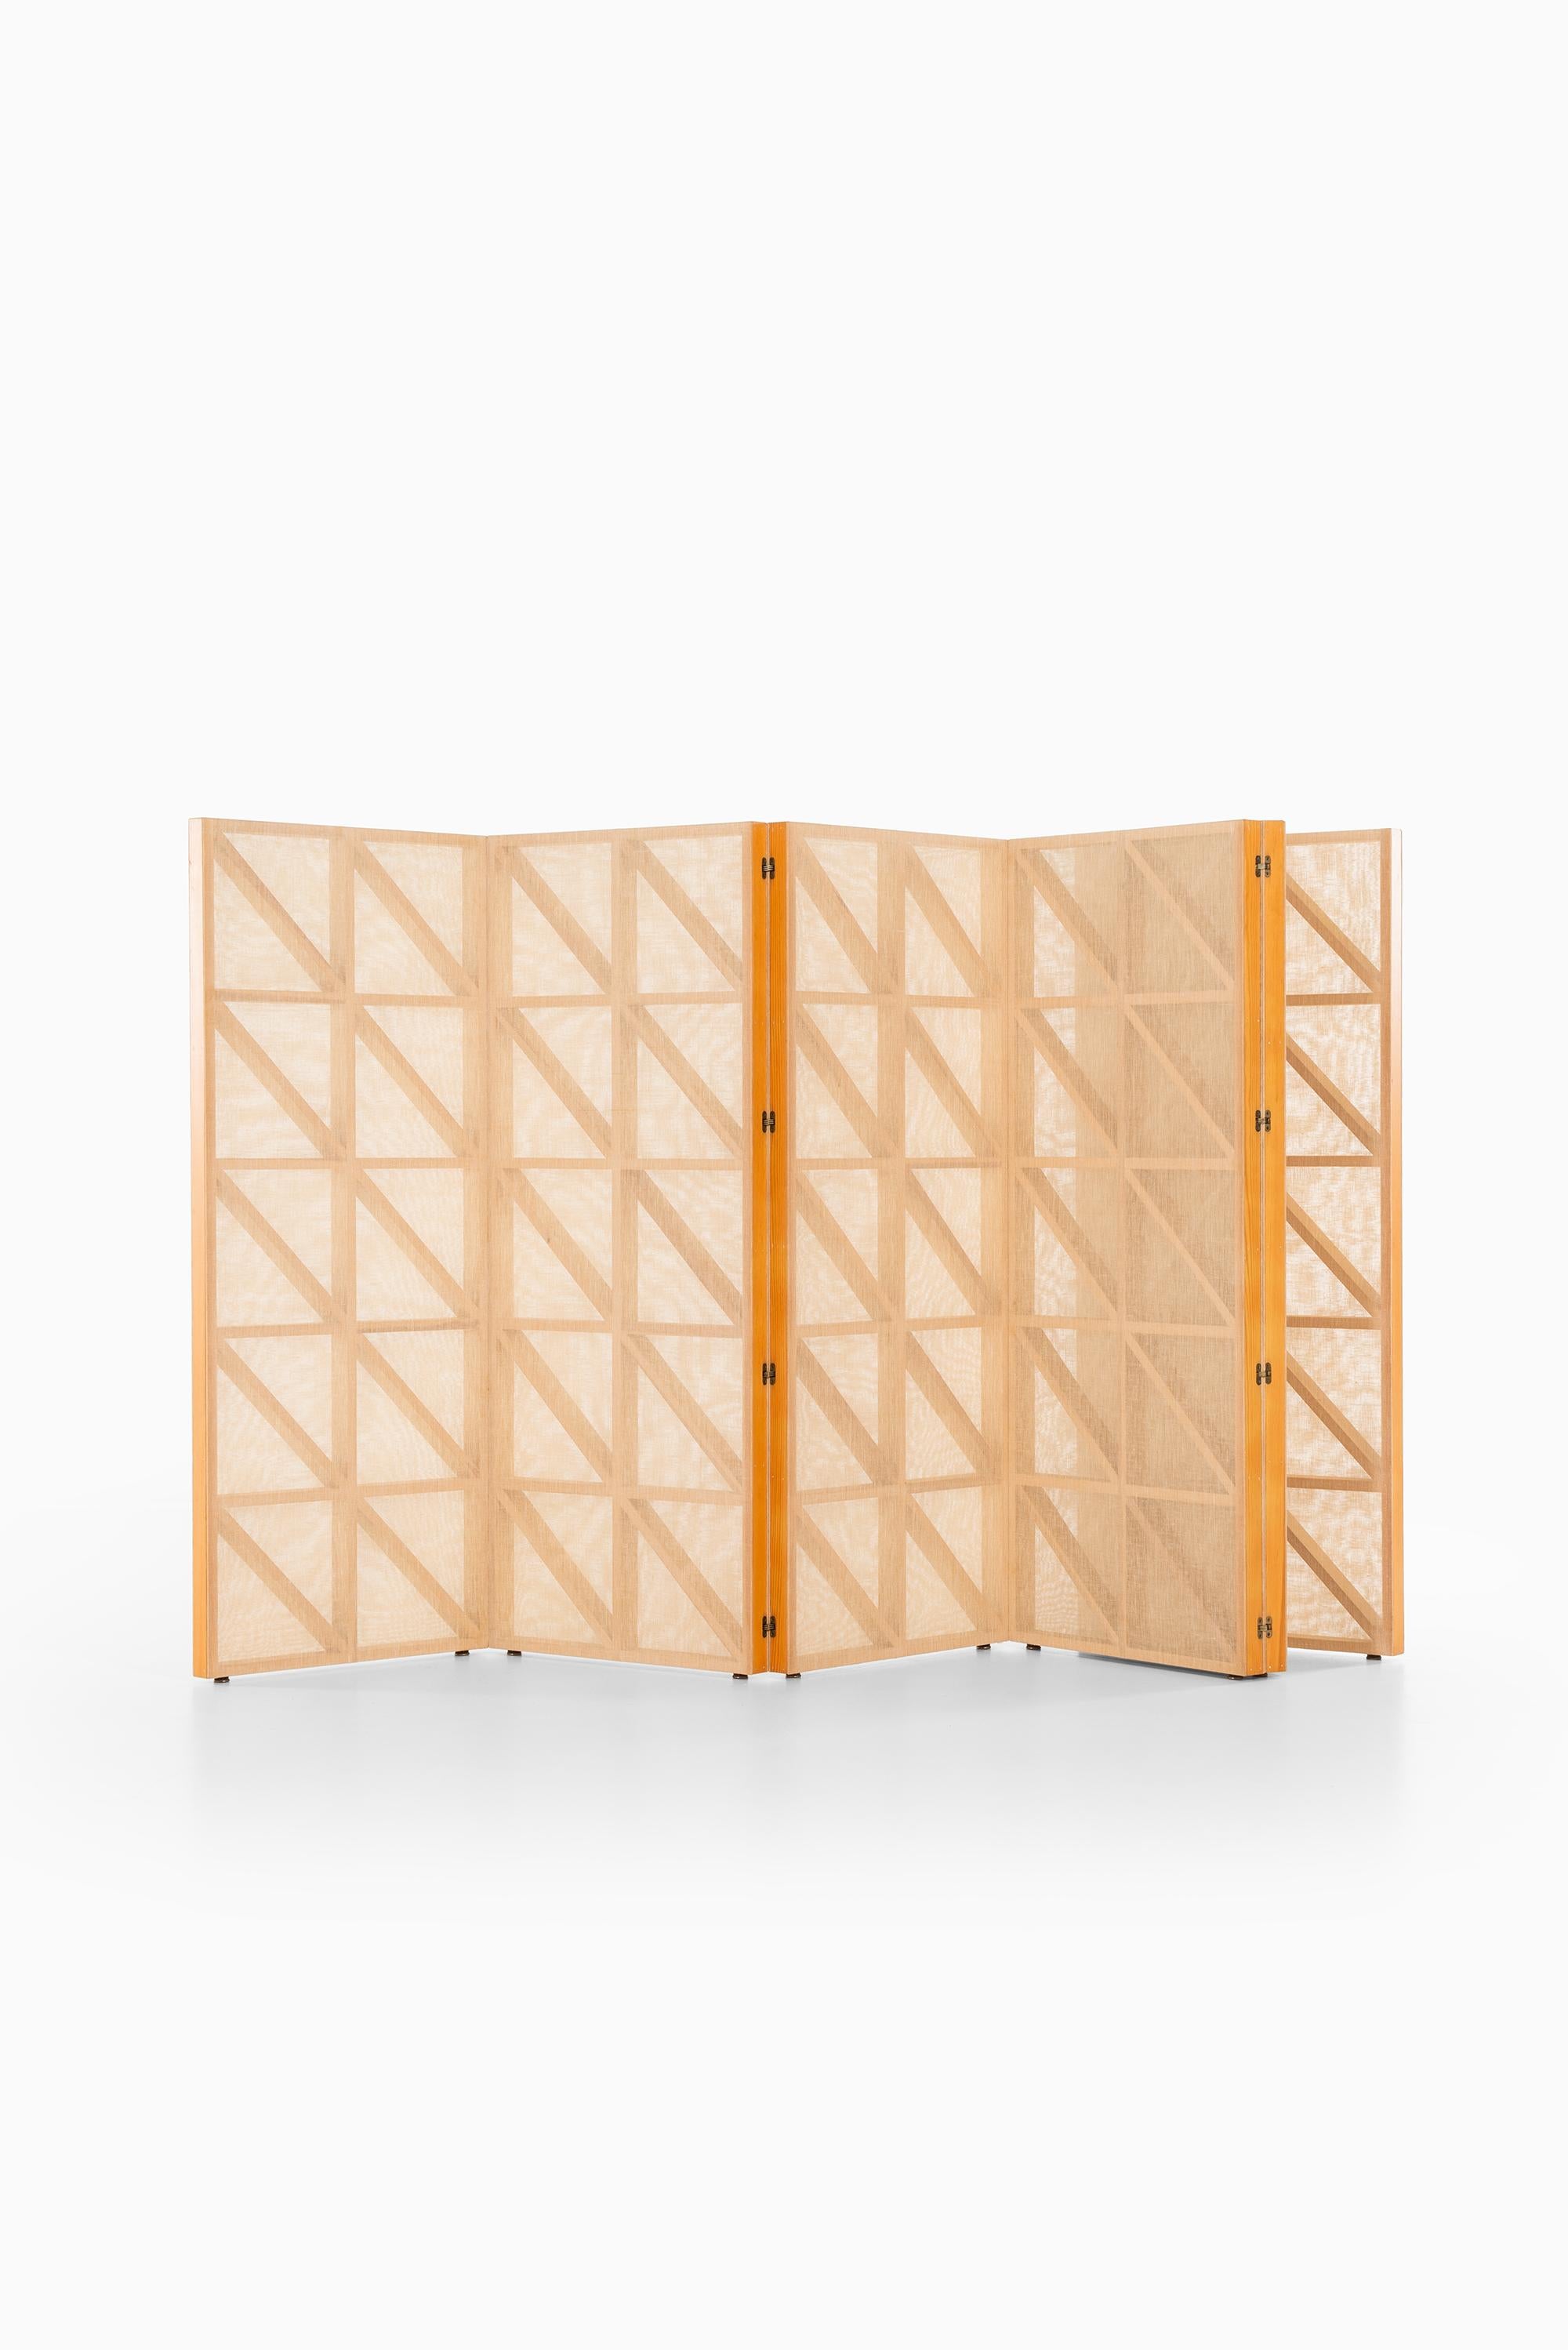 Swedish Folding Screen / Room Divider Produced in Sweden